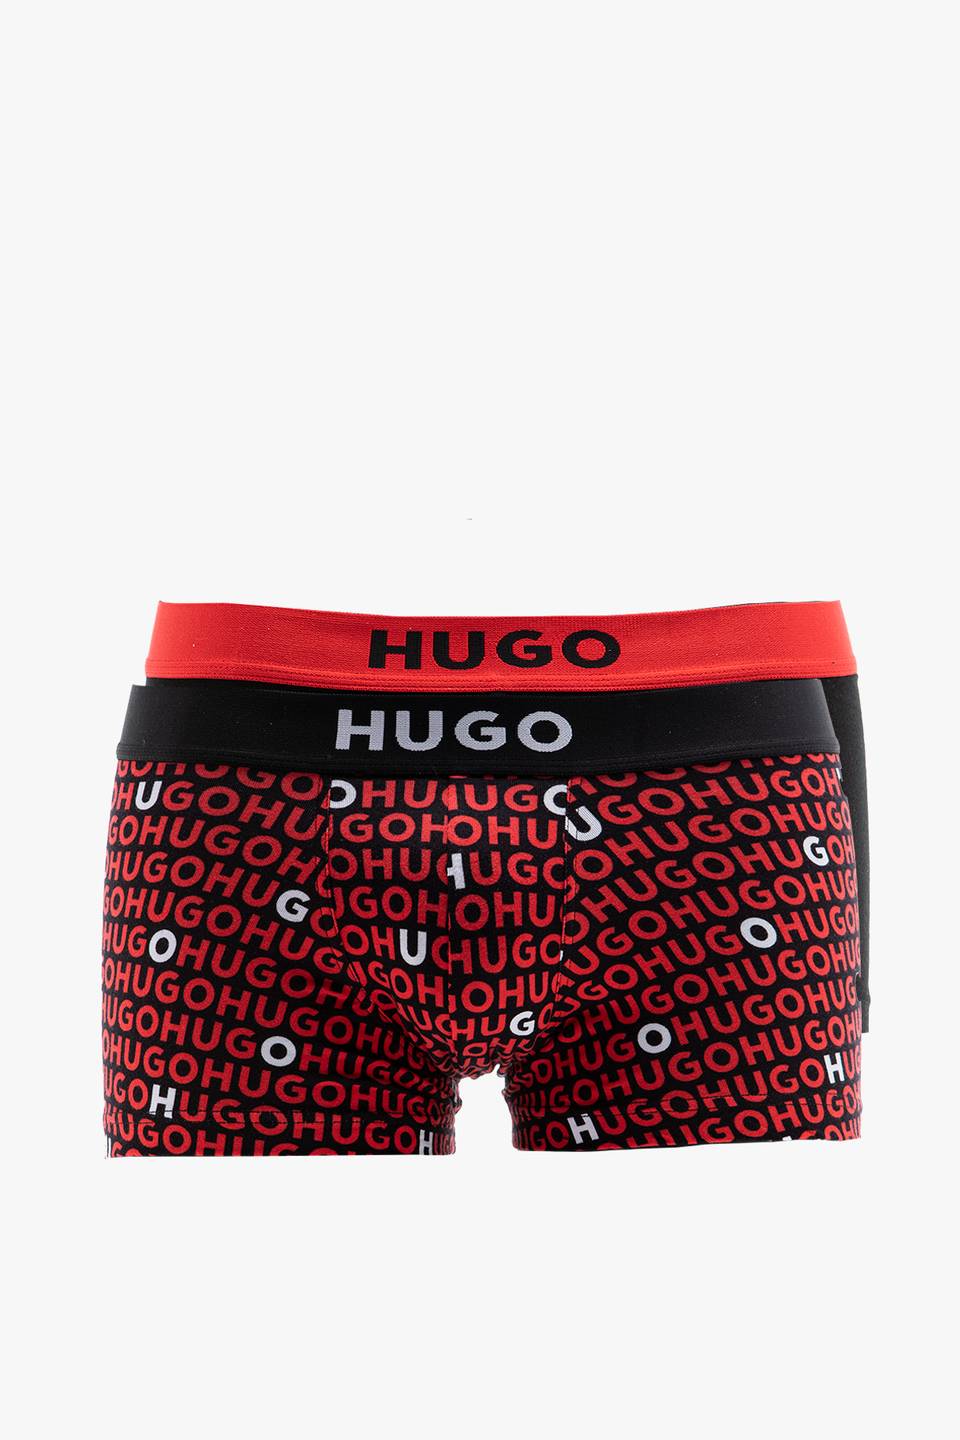 Majtki Hugo Boss trunk brother pack 10241846 01 50469708-640